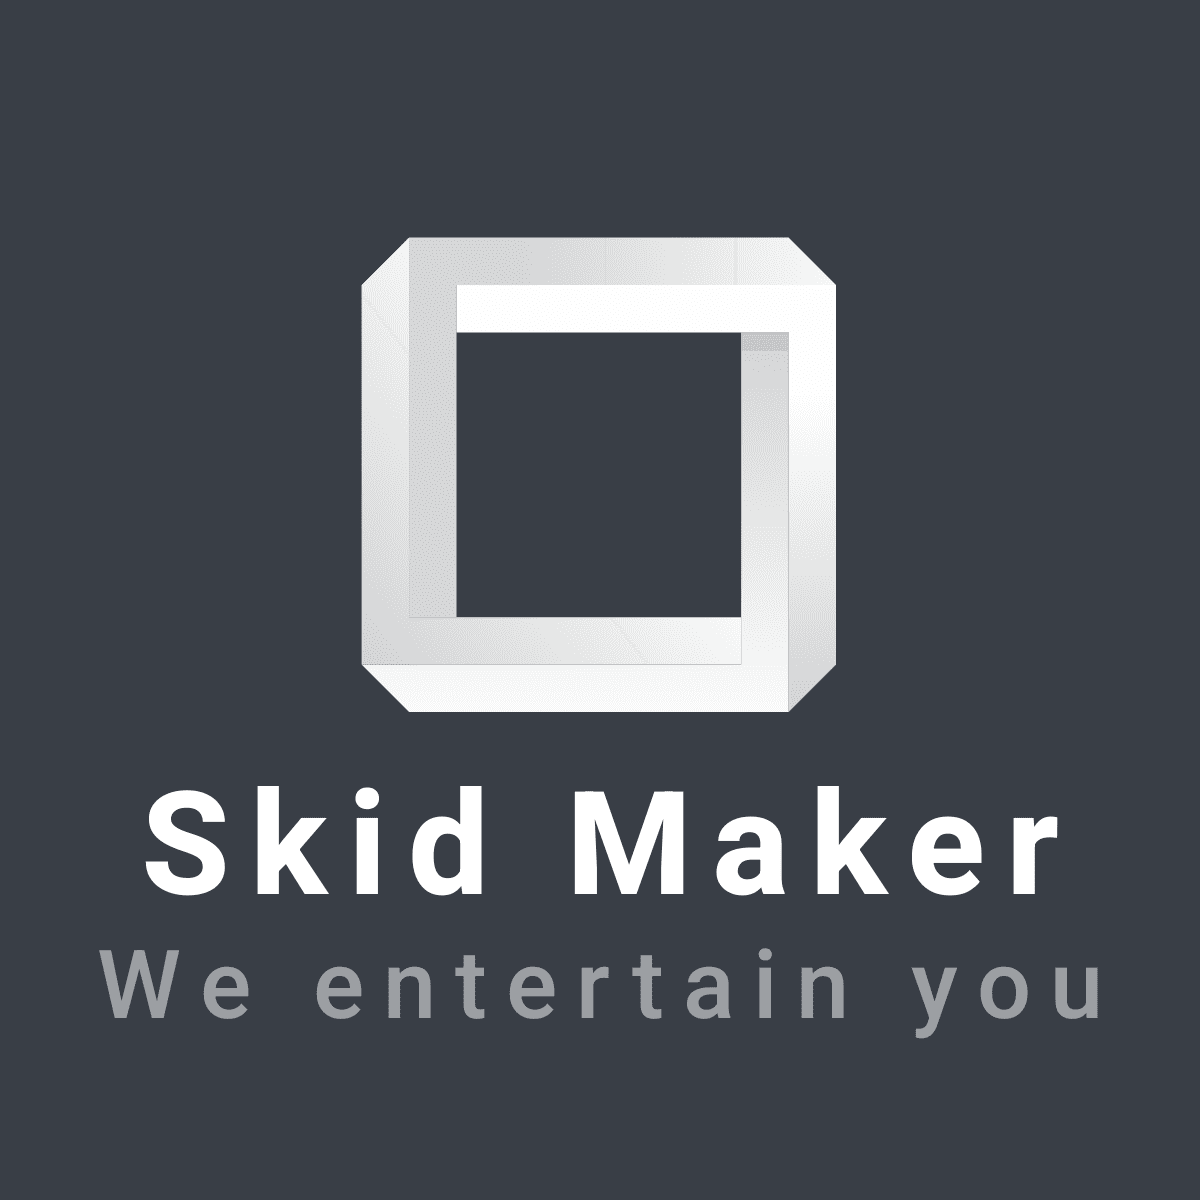 Skid Maker